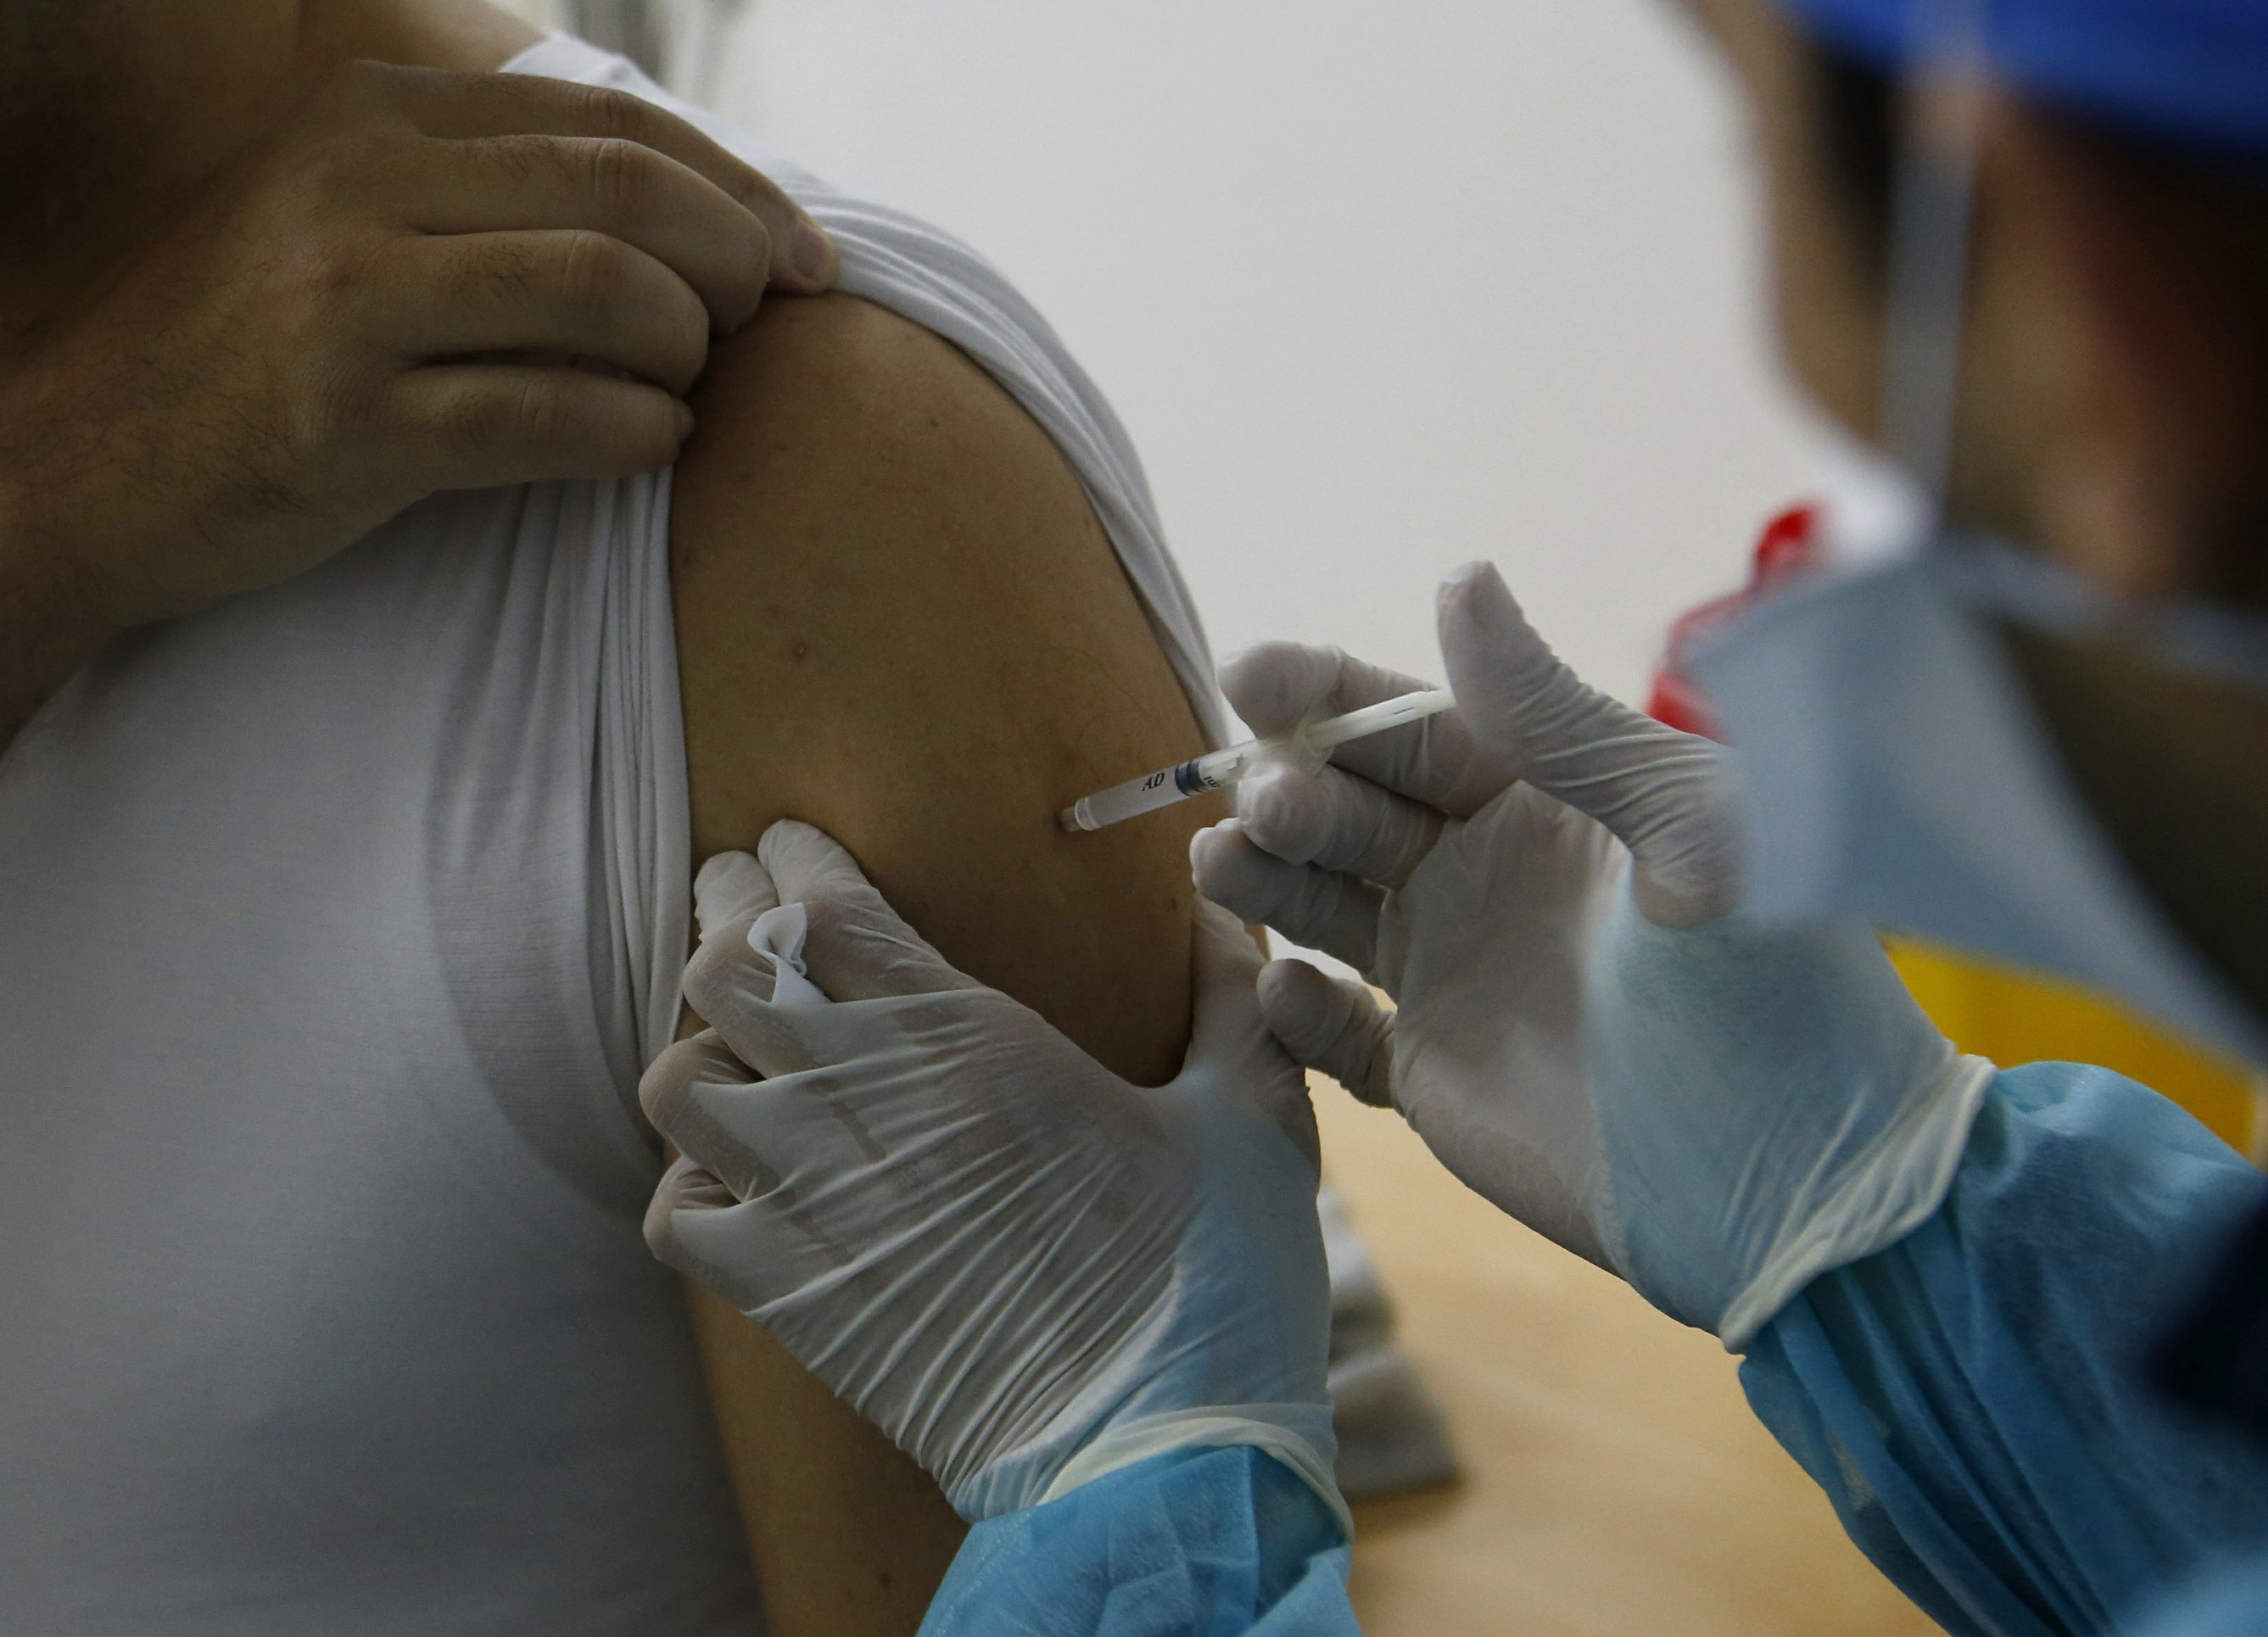 UN authorizes AstraZeneca’s COVID vaccine for emergency use